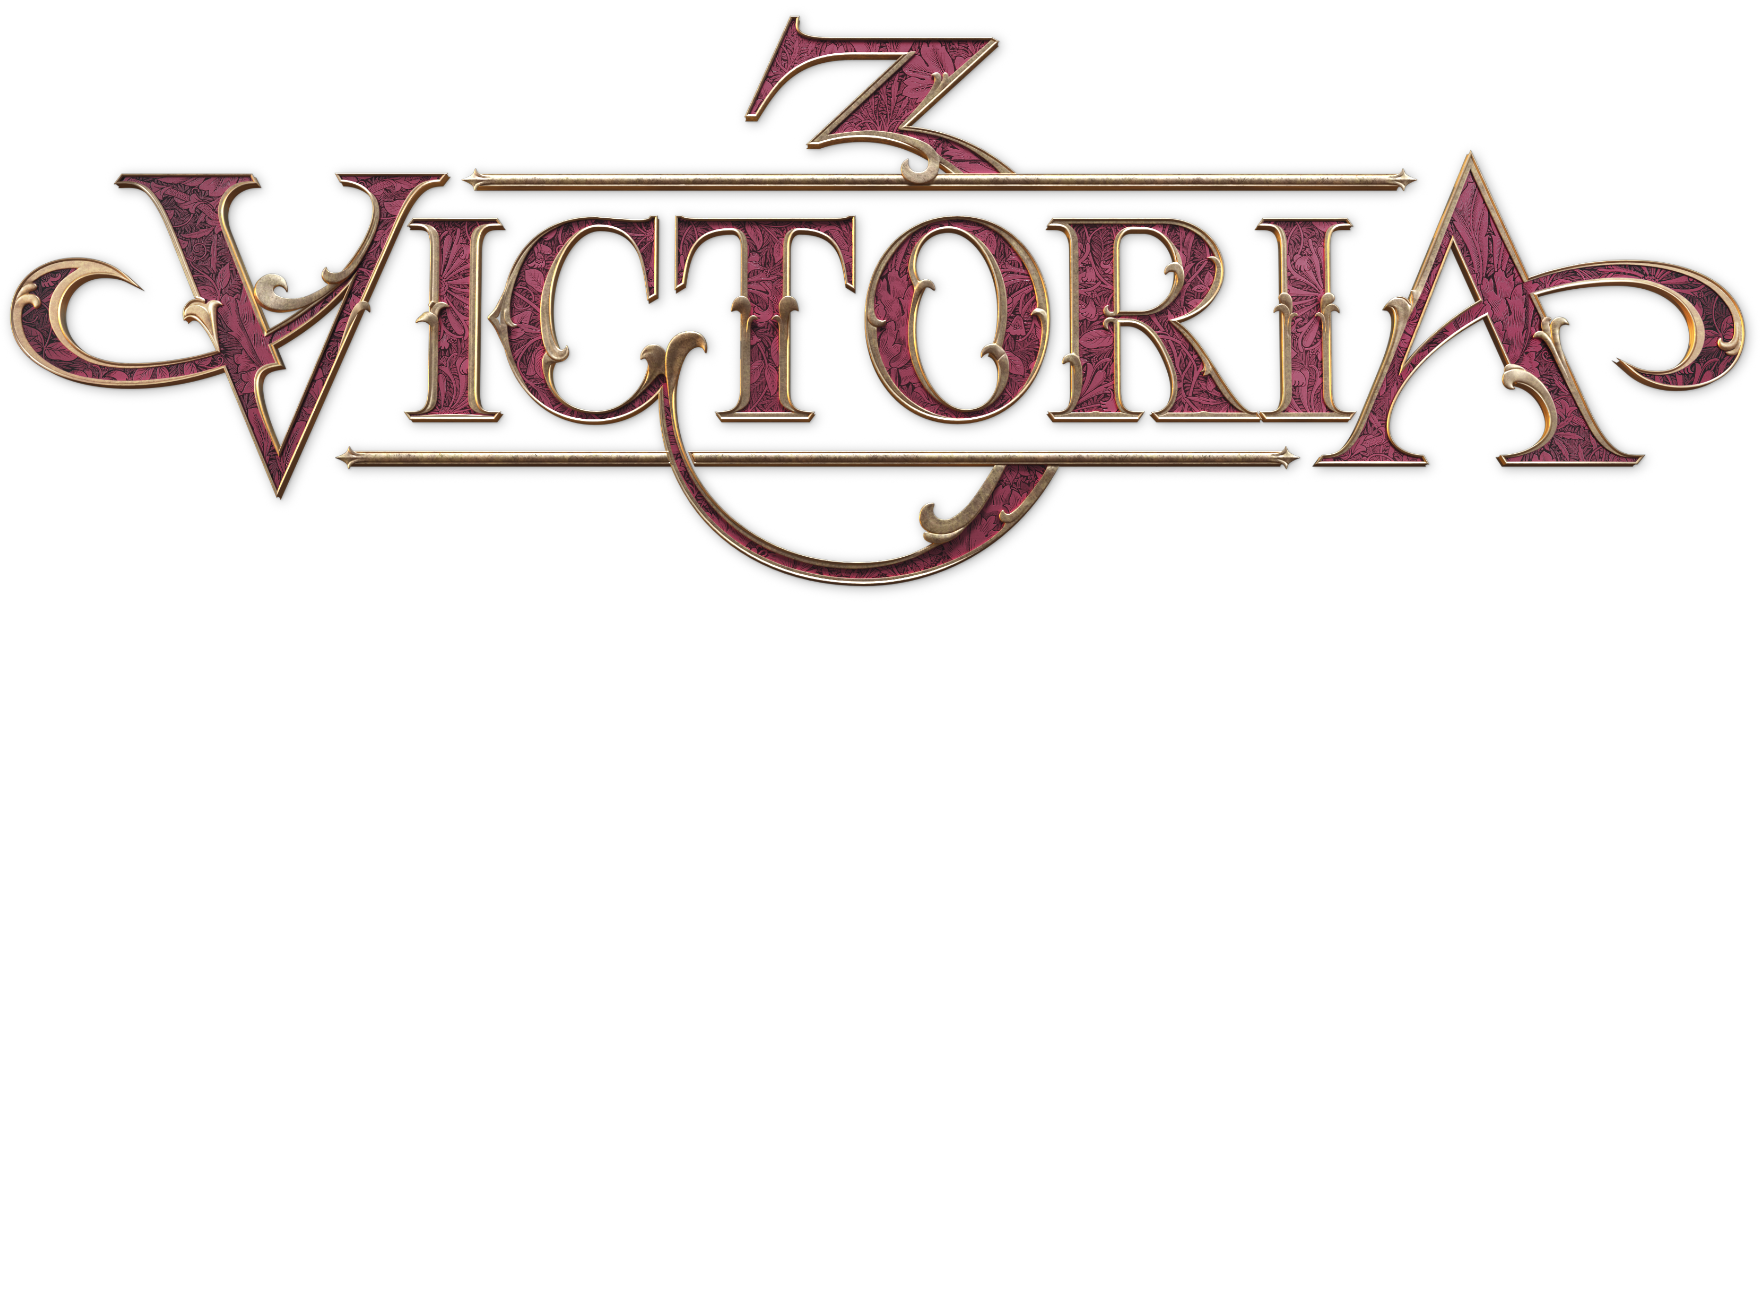 vic3 Logo 1620x1300